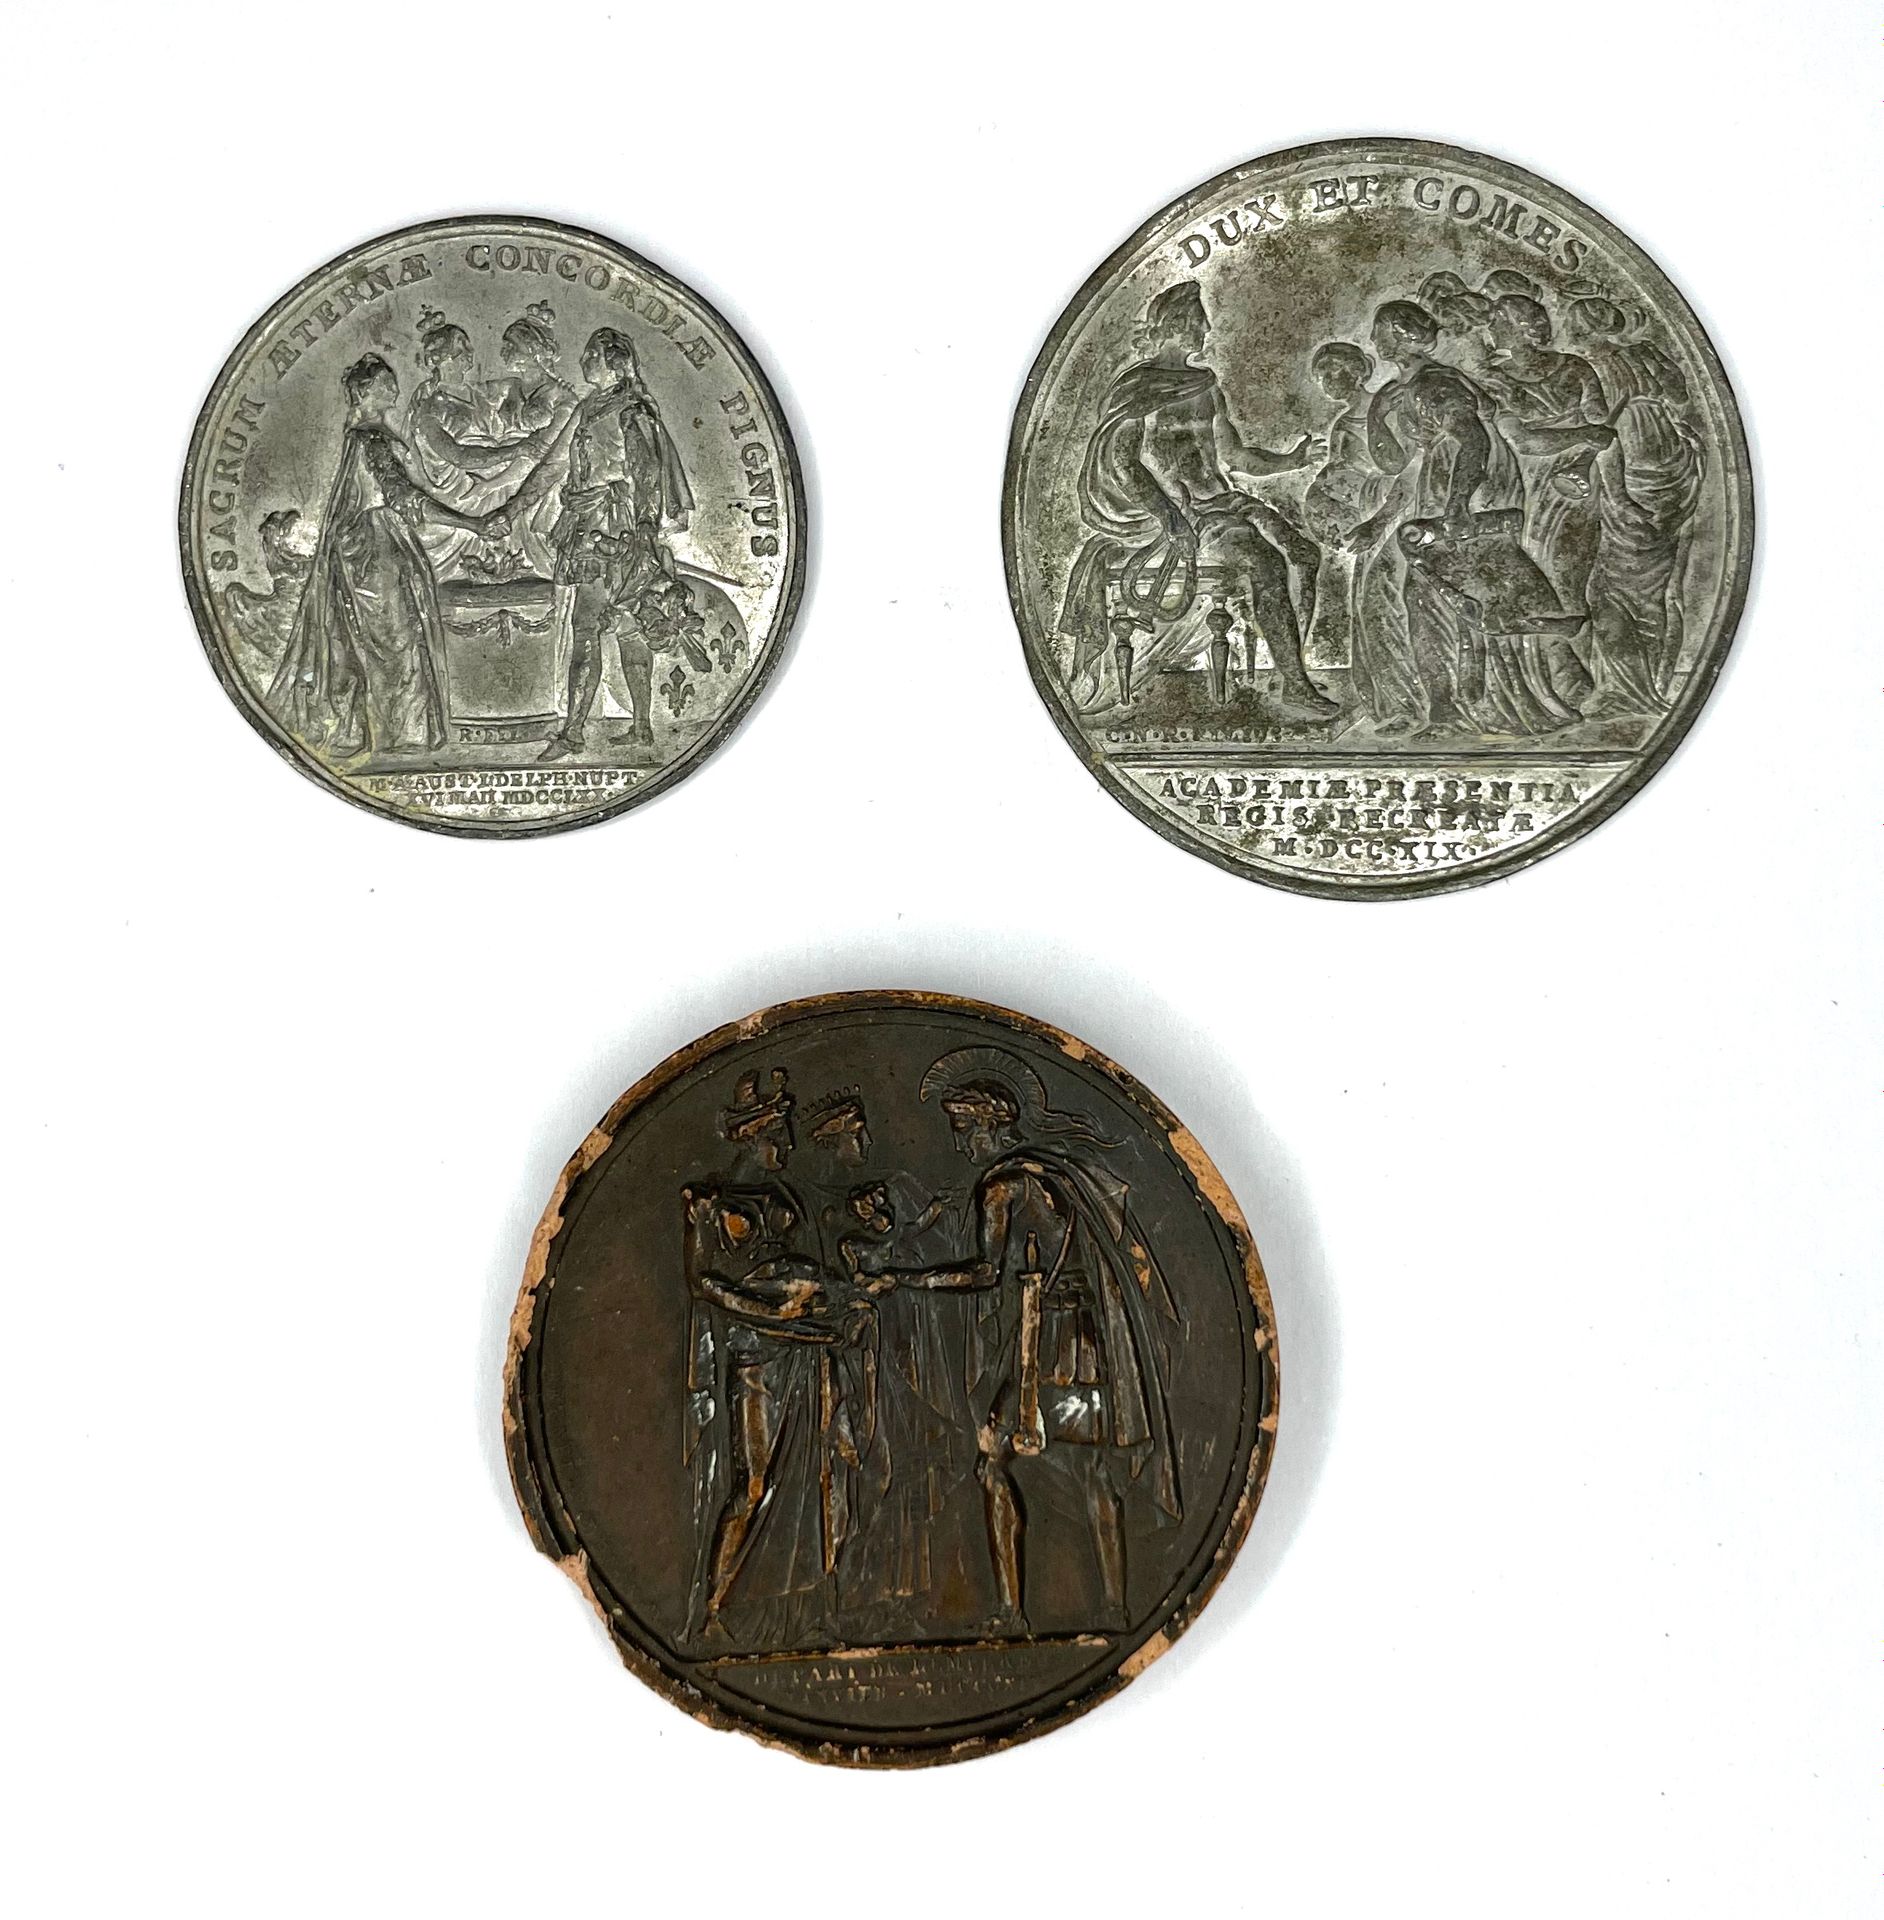 Null 法国 - 勋章

一套两个单面锡制样板的奖牌，附有单面石膏印模

这些证明可能是硬币制造的第二个阶段

重量：4,82和6,00克

材料：锡和铅的混&hellip;